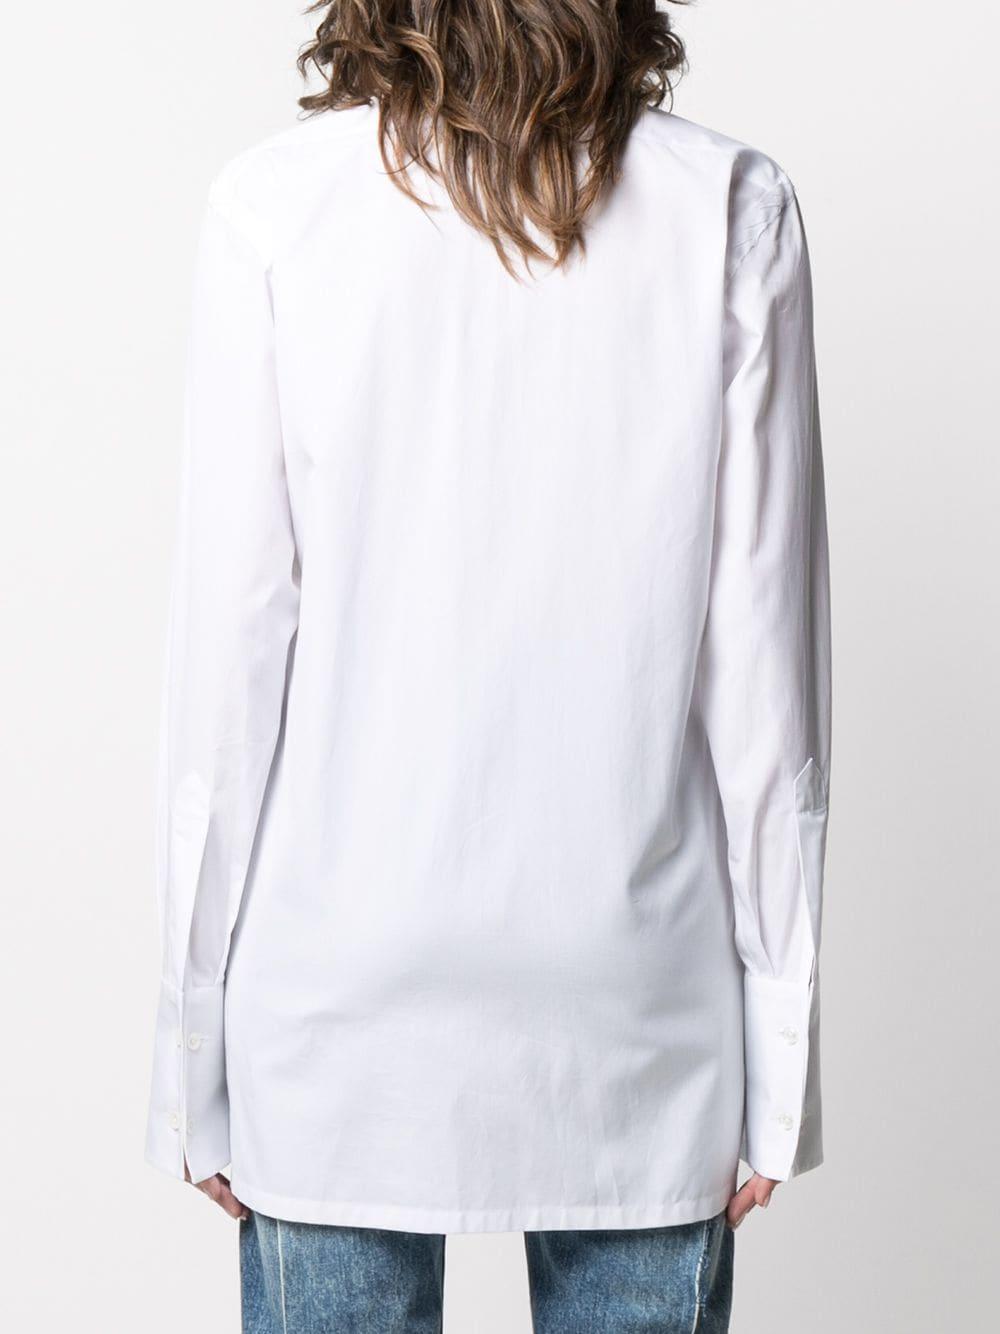 Maison Margiela Button-up Shirt in White - Lyst